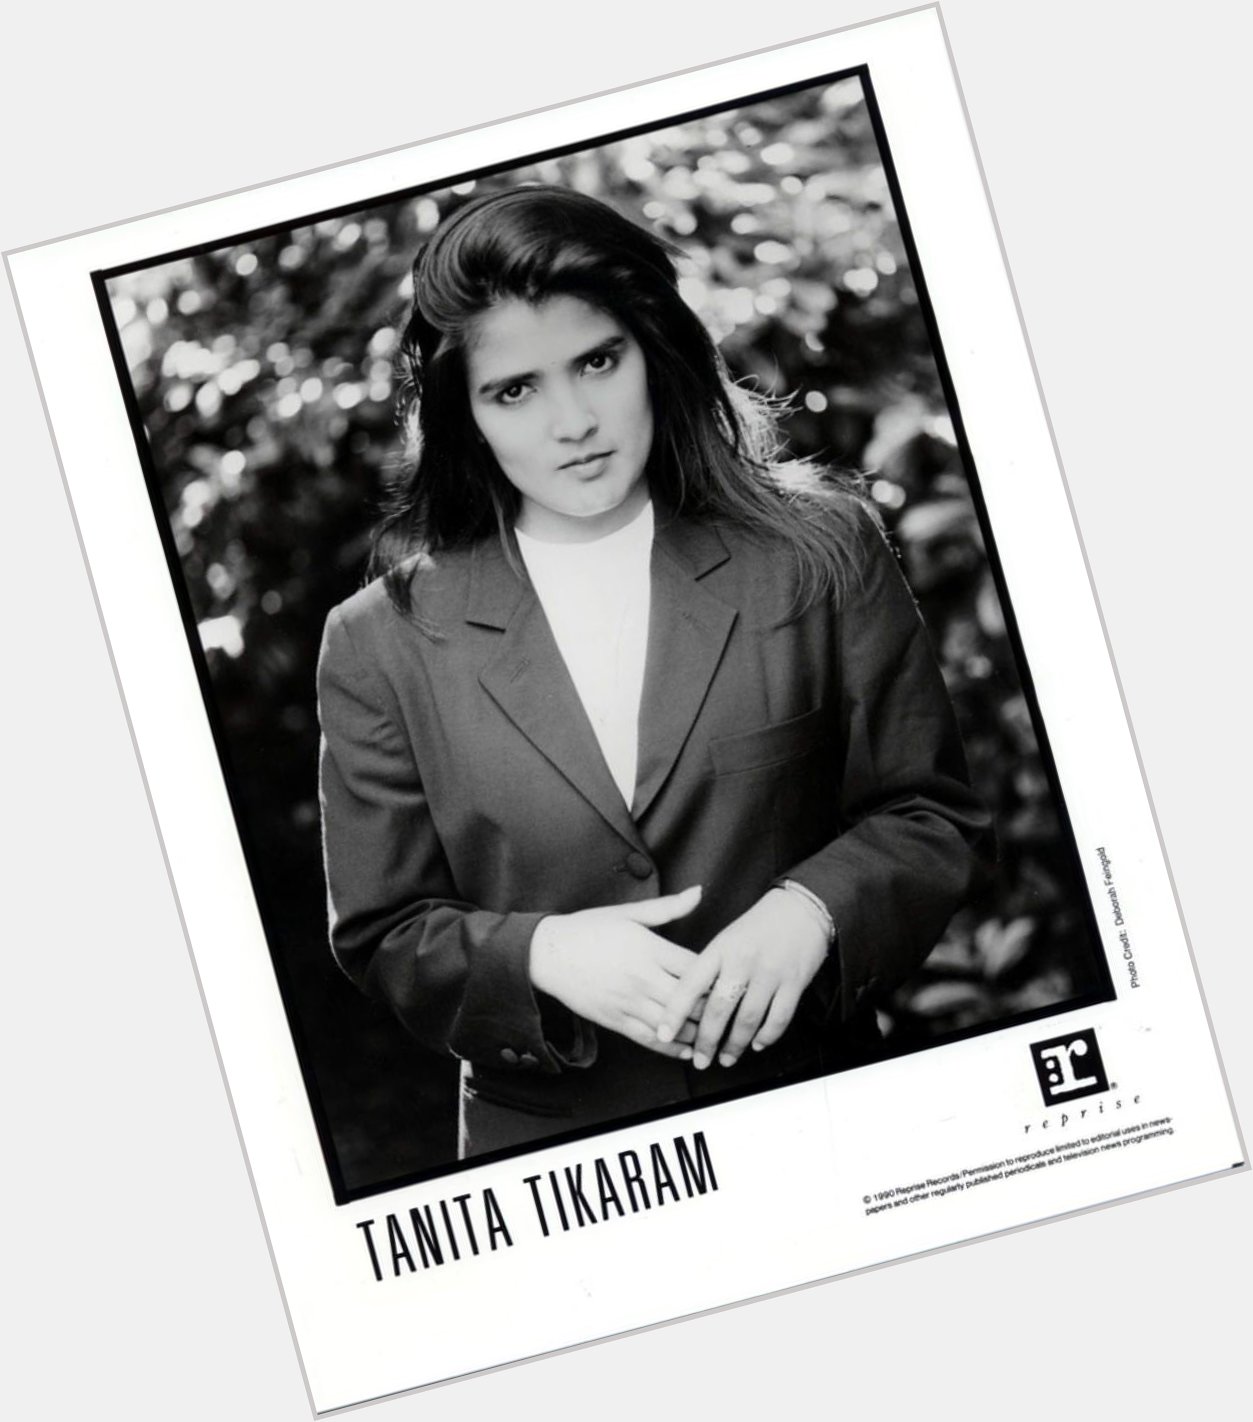 Happy birthday to British pop/folk singer-songwriter Tanita Tikaram, born August 12, 1969. 